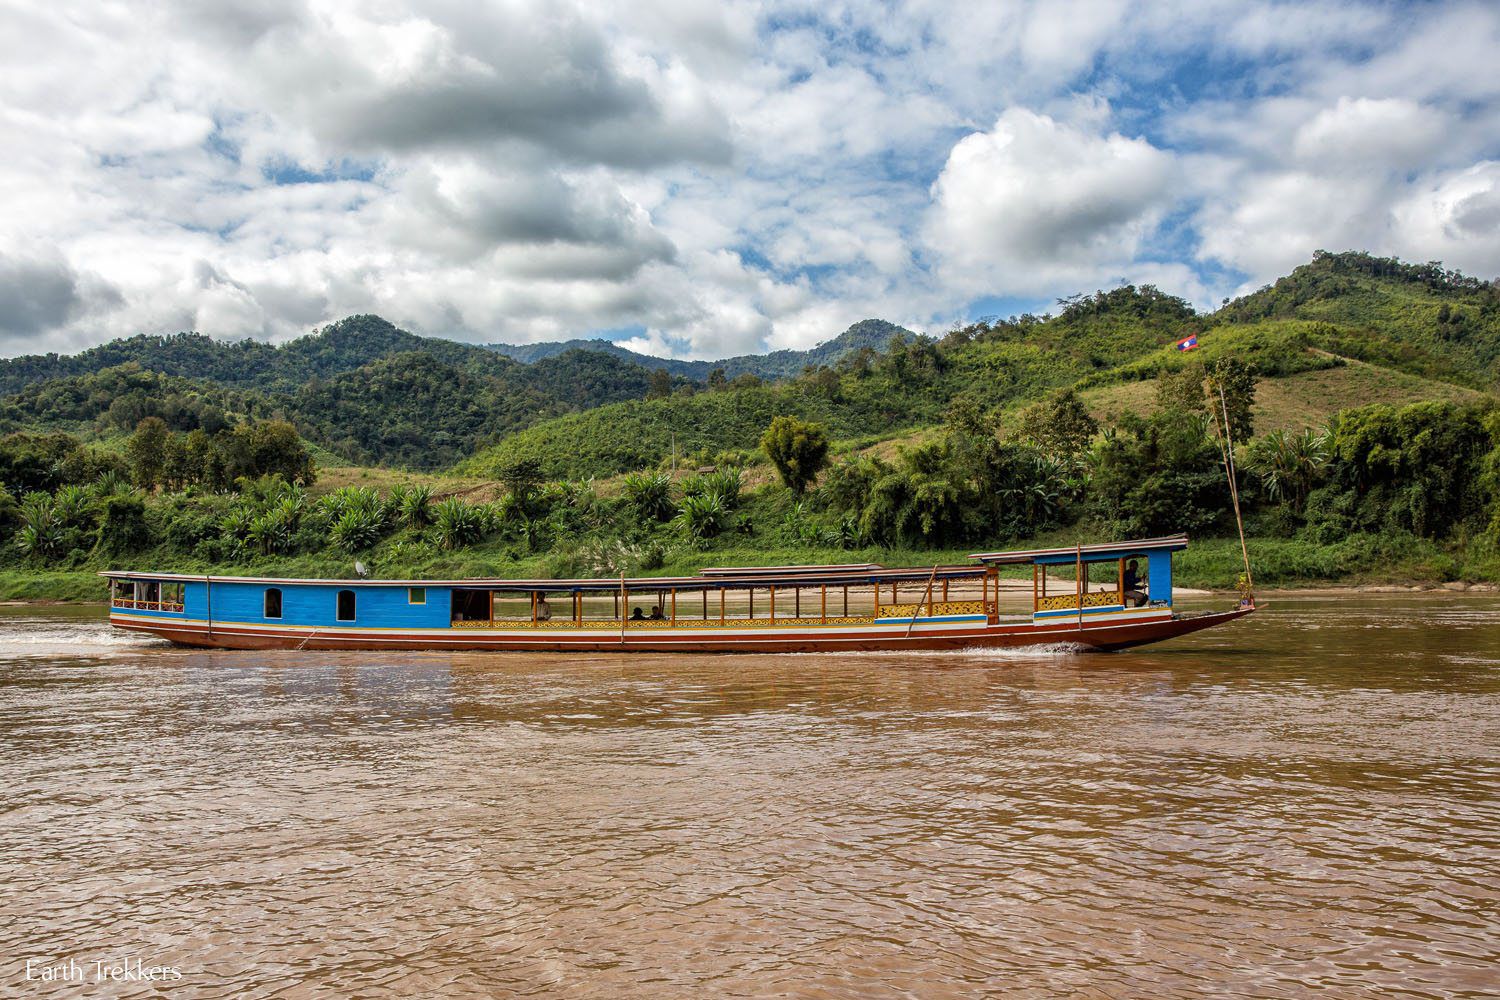 Mekong River Trip to Laos